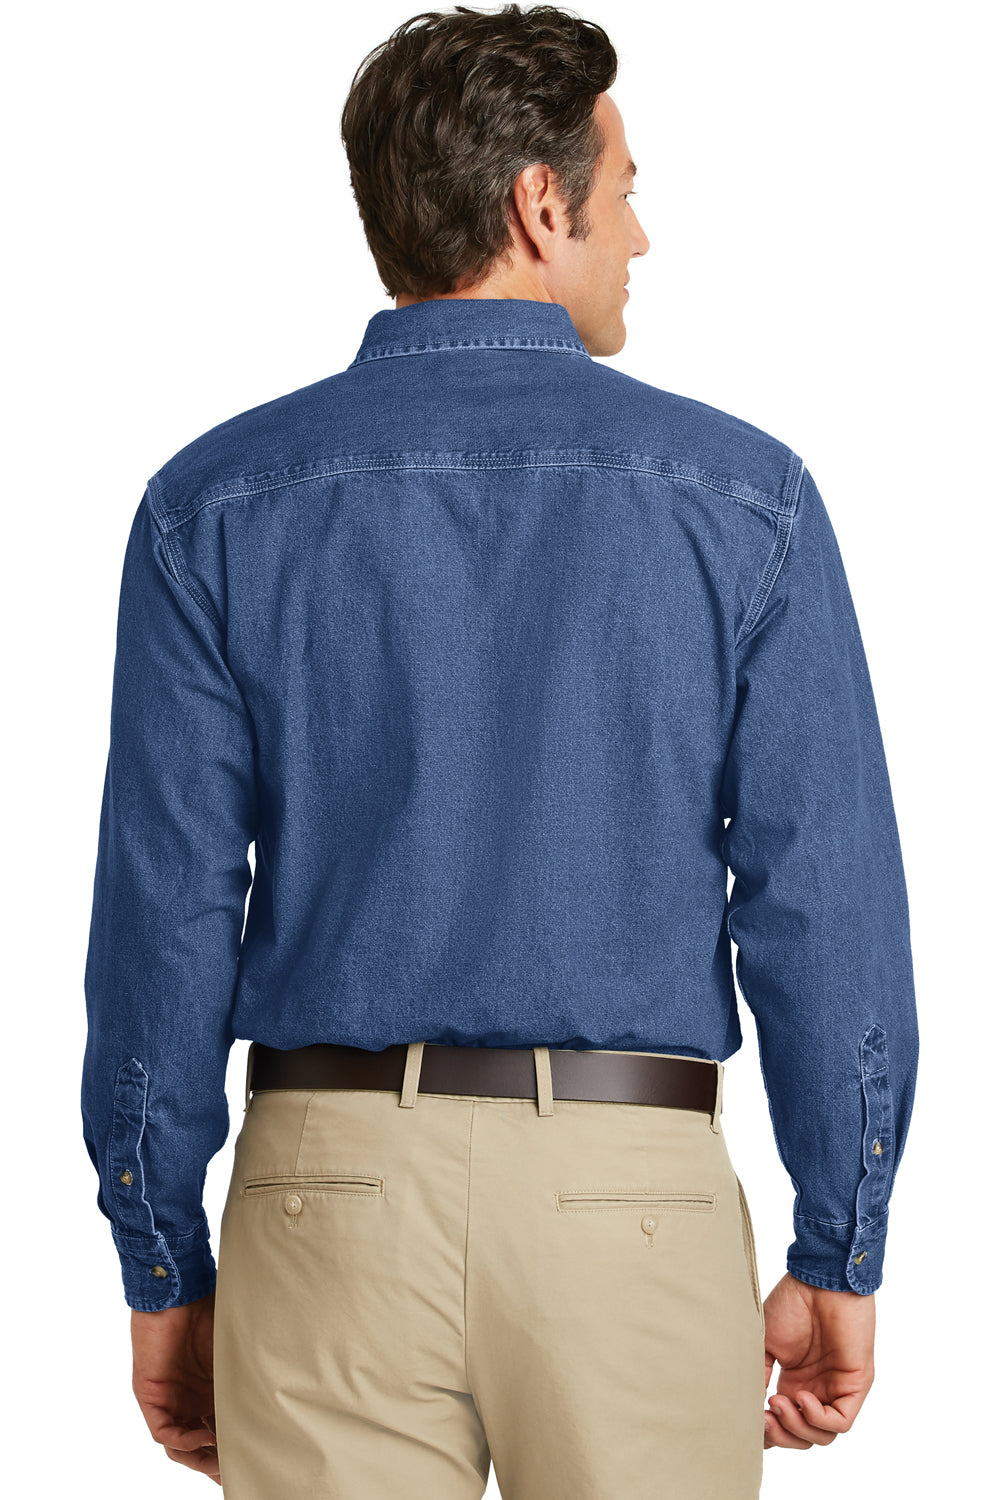 Port Authority S100 Mens Denim Long Sleeve Button Down Shirt w/ Pocket Blue Back